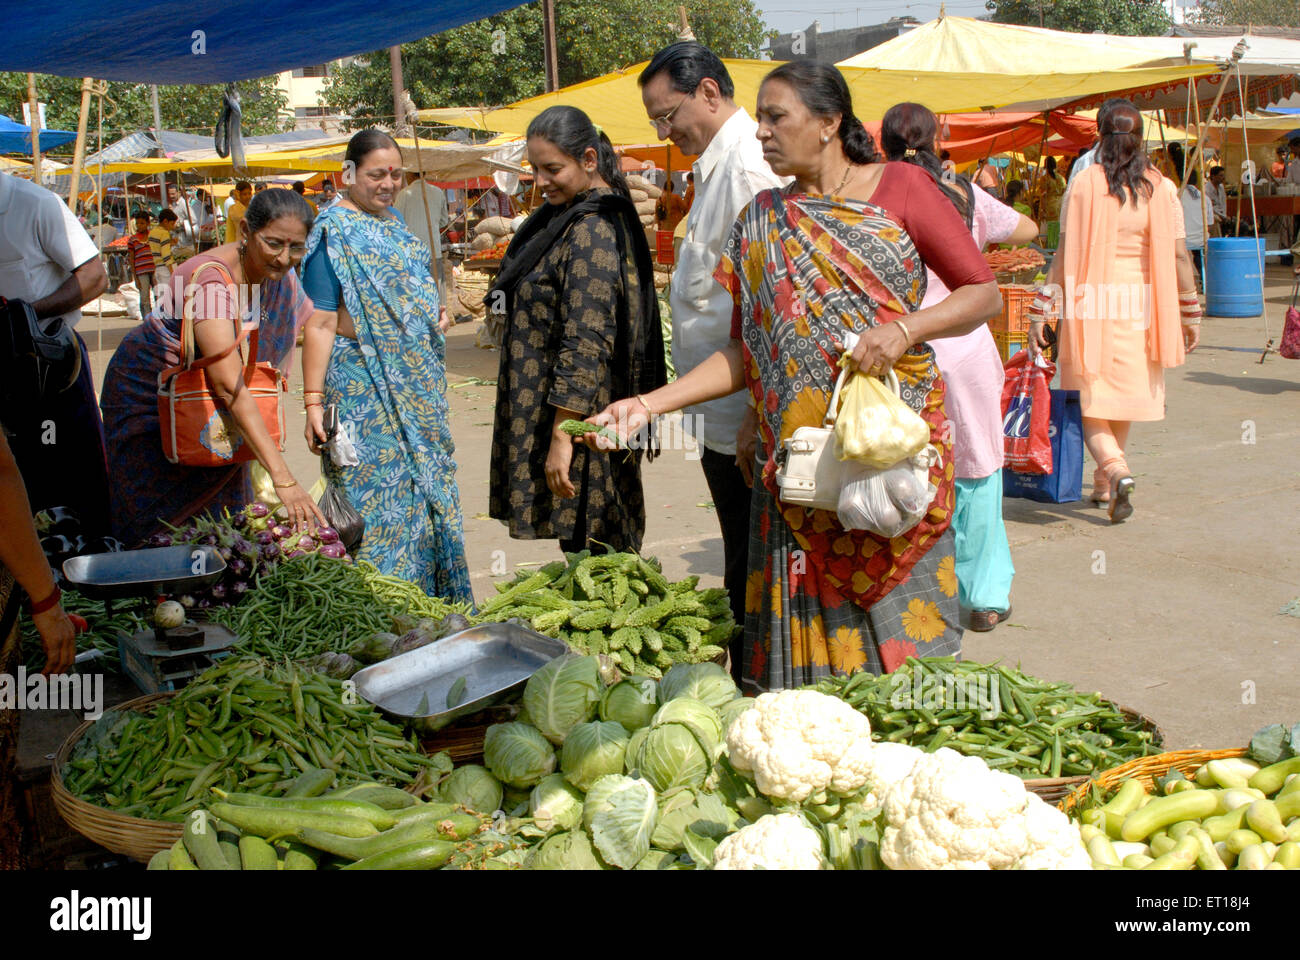 Indische Frauen kaufen Gemüse, devlali, nasik, Maharashtra, Indien - Herr Nr. 364-Rmm 163416 Stockfoto